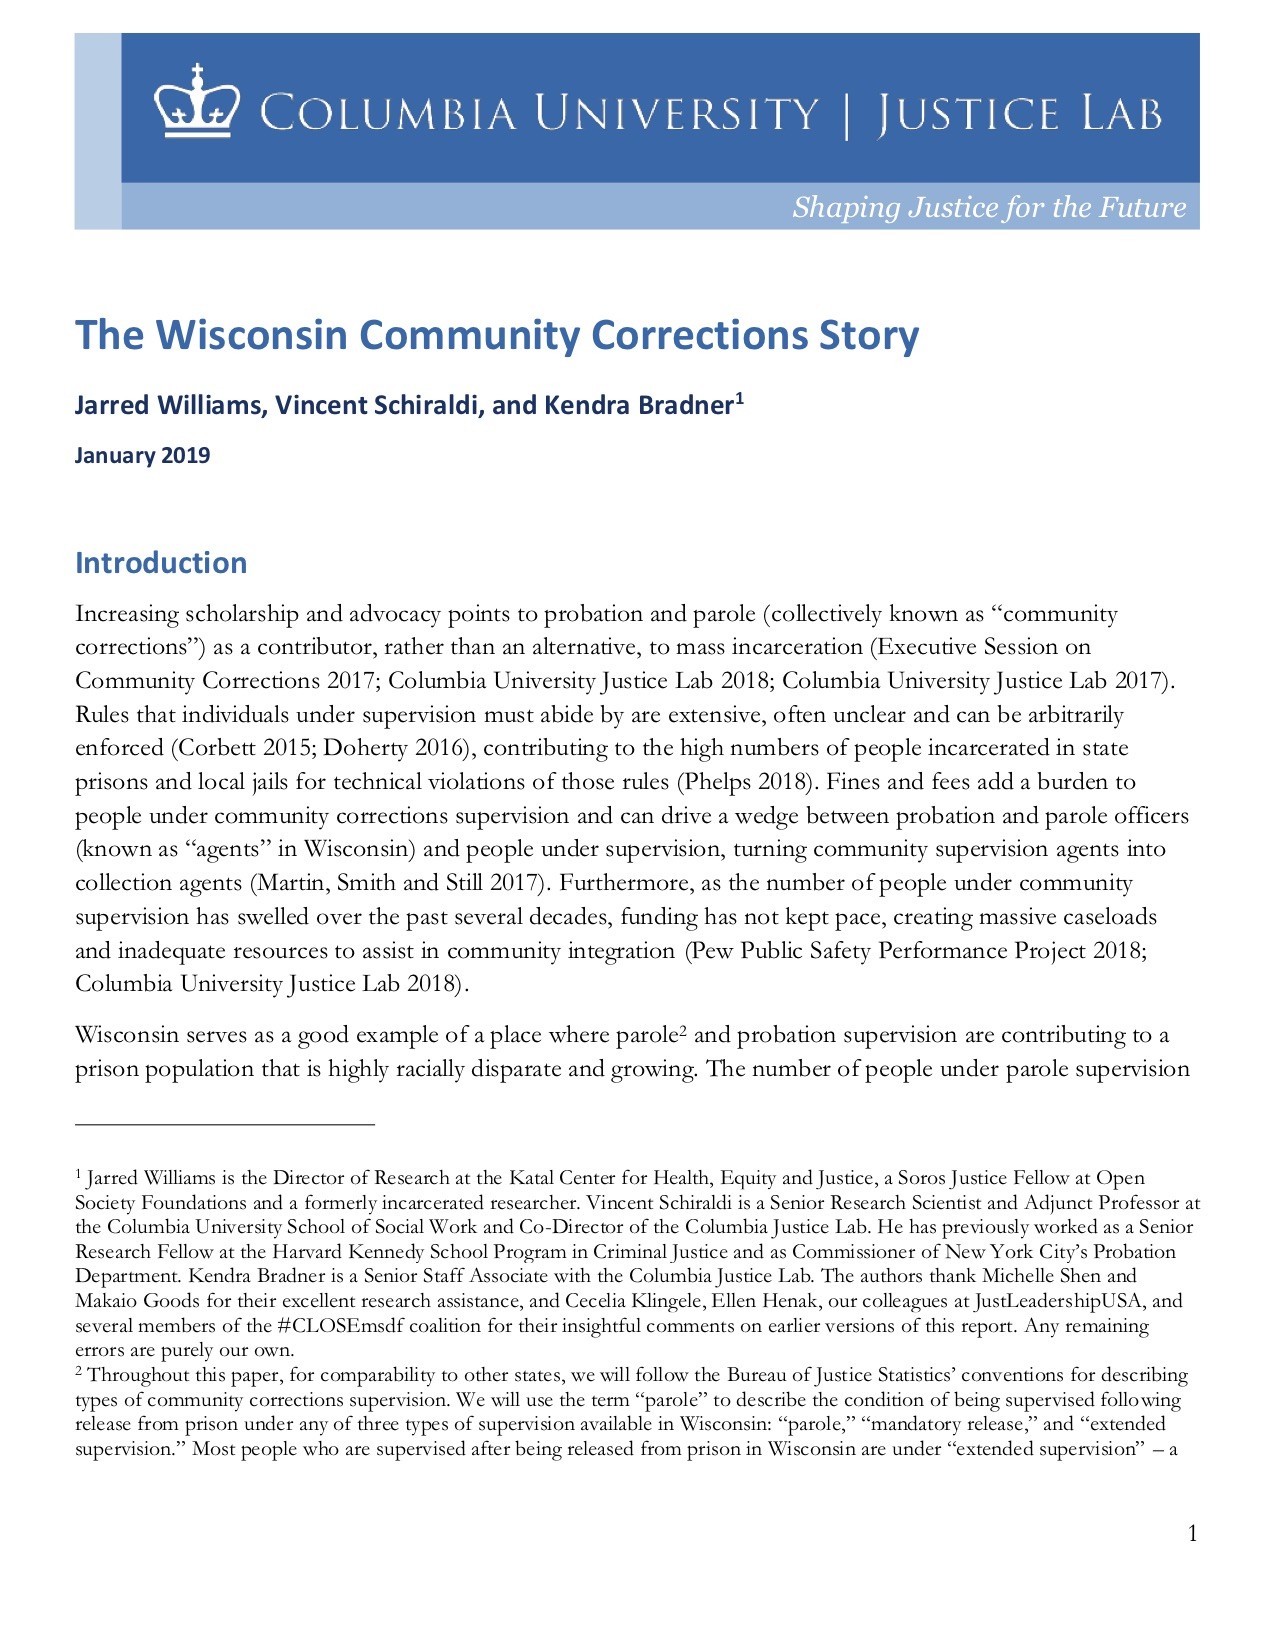 Wisconsin Community Corrections Story